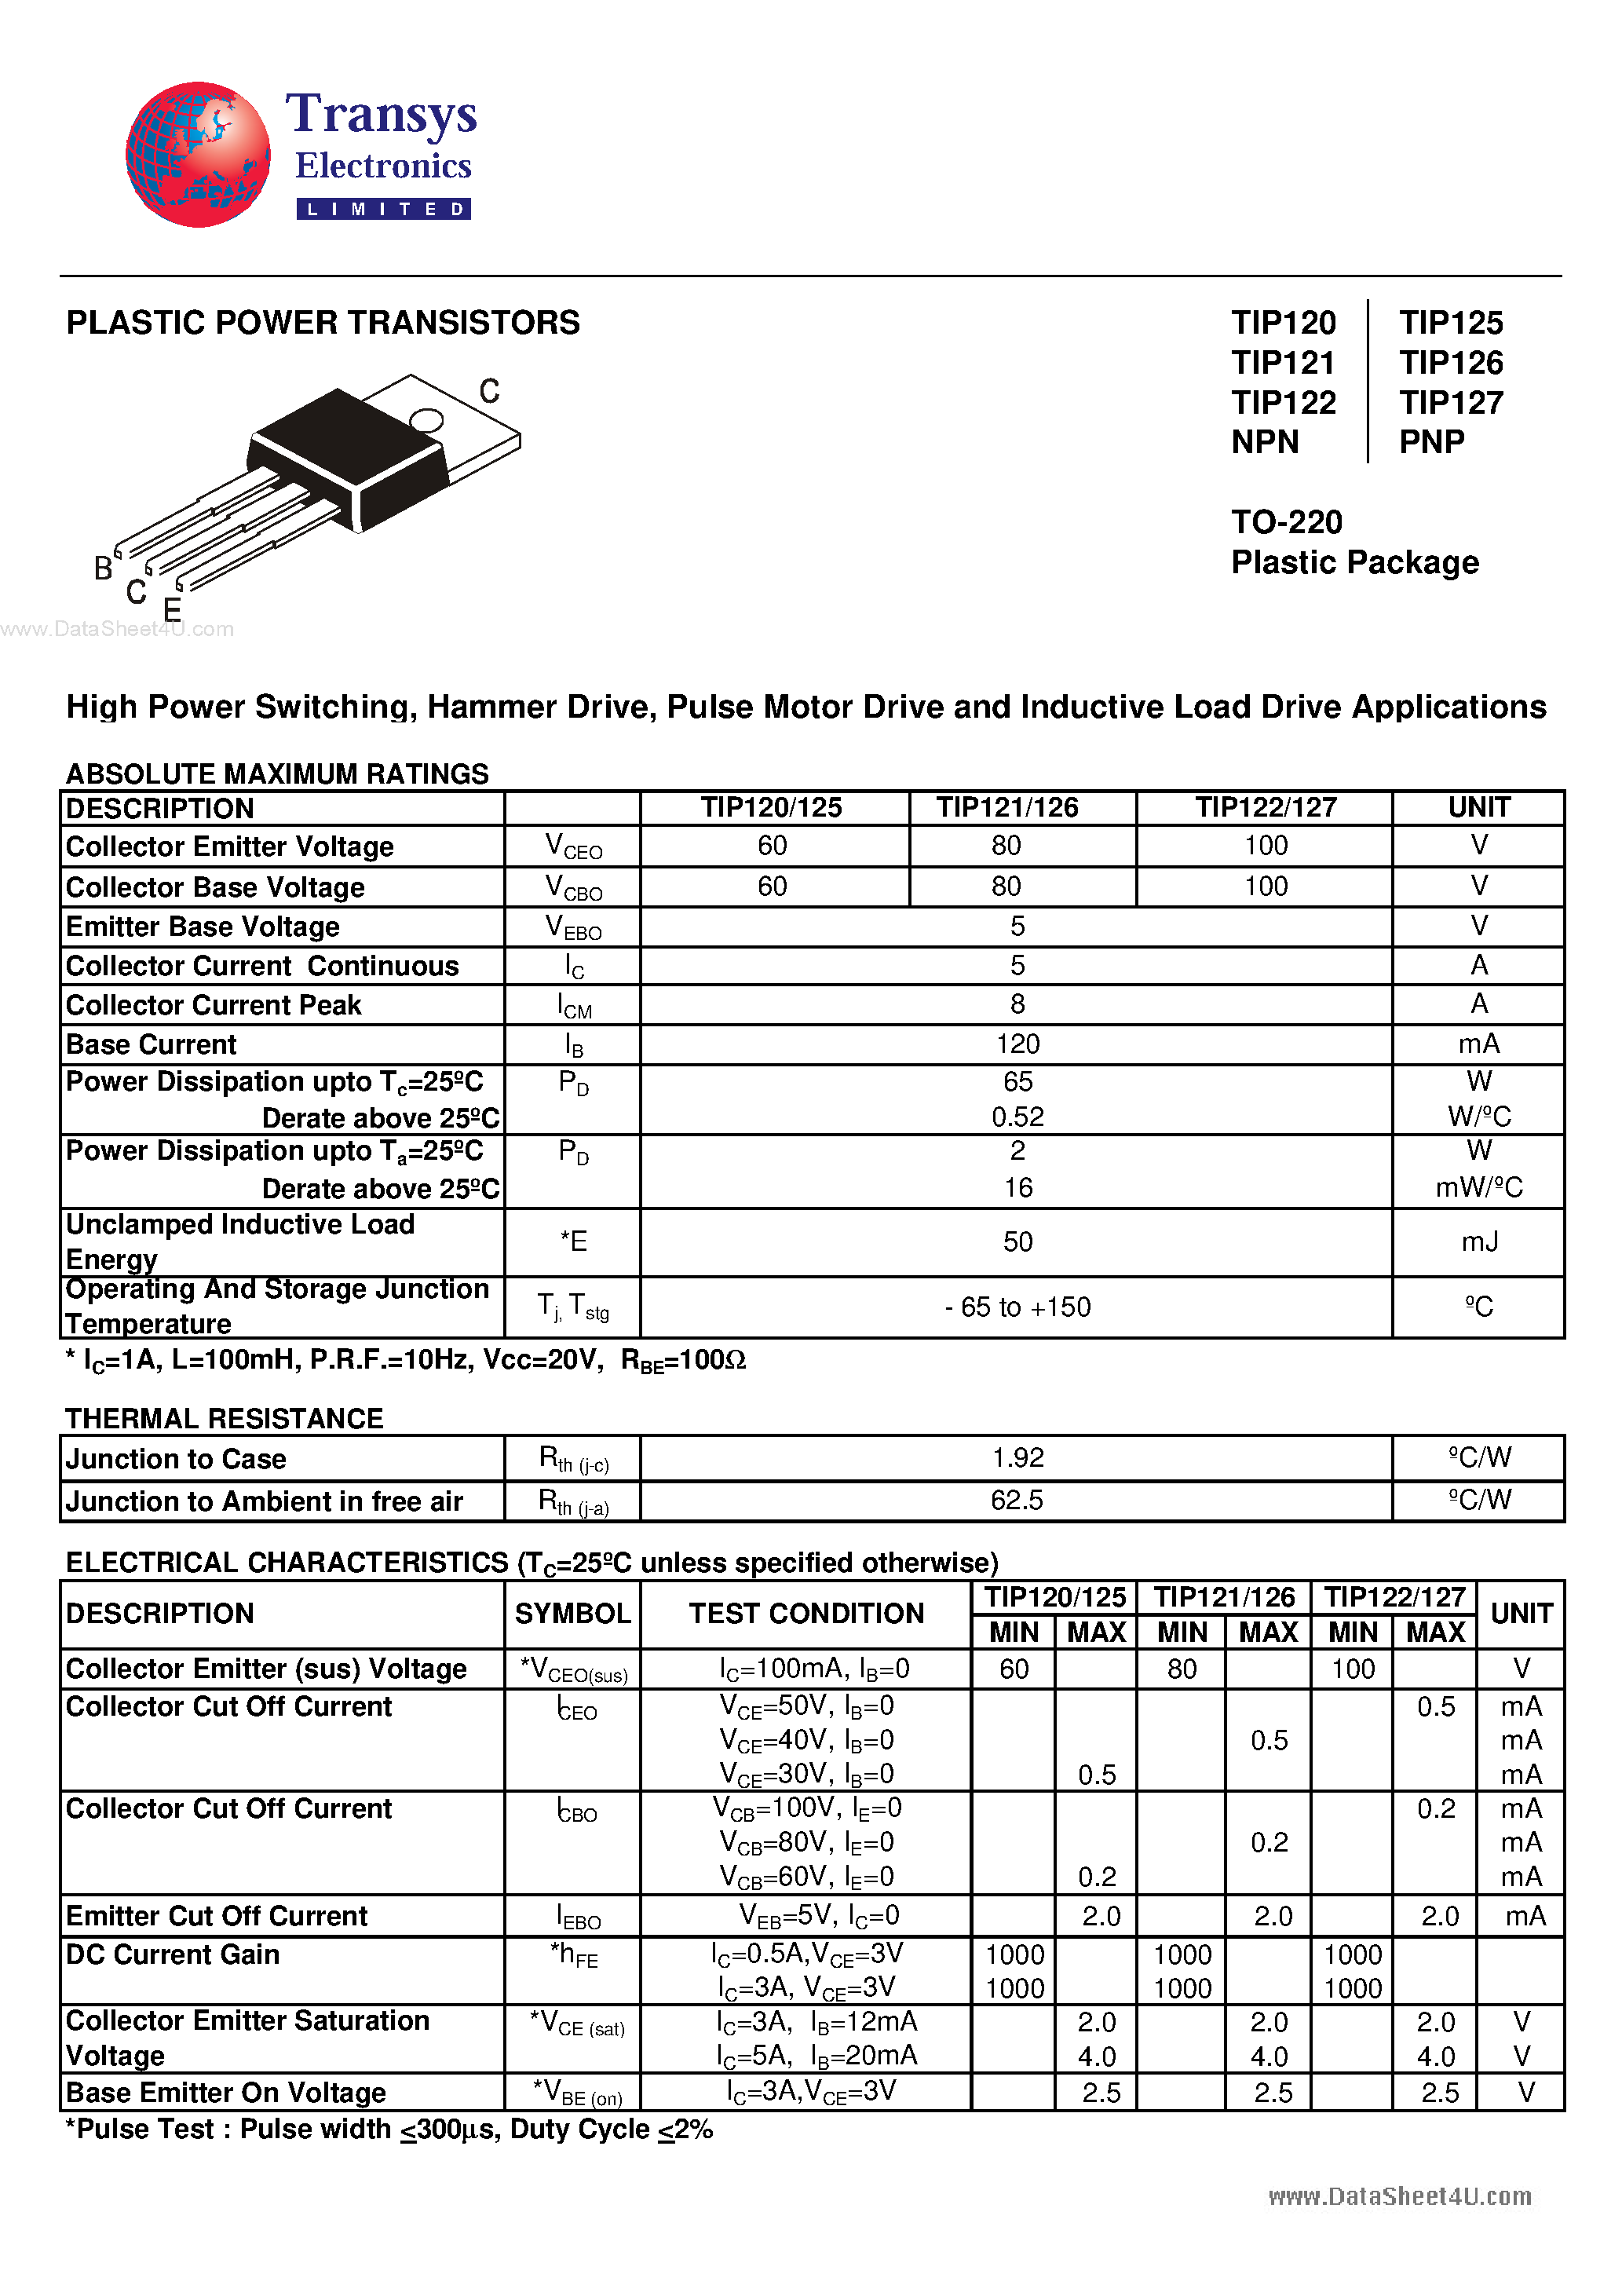 Даташит TIP120 - (TIP120 - TIP127) PLASTIC POWER TRANSISTORS страница 1